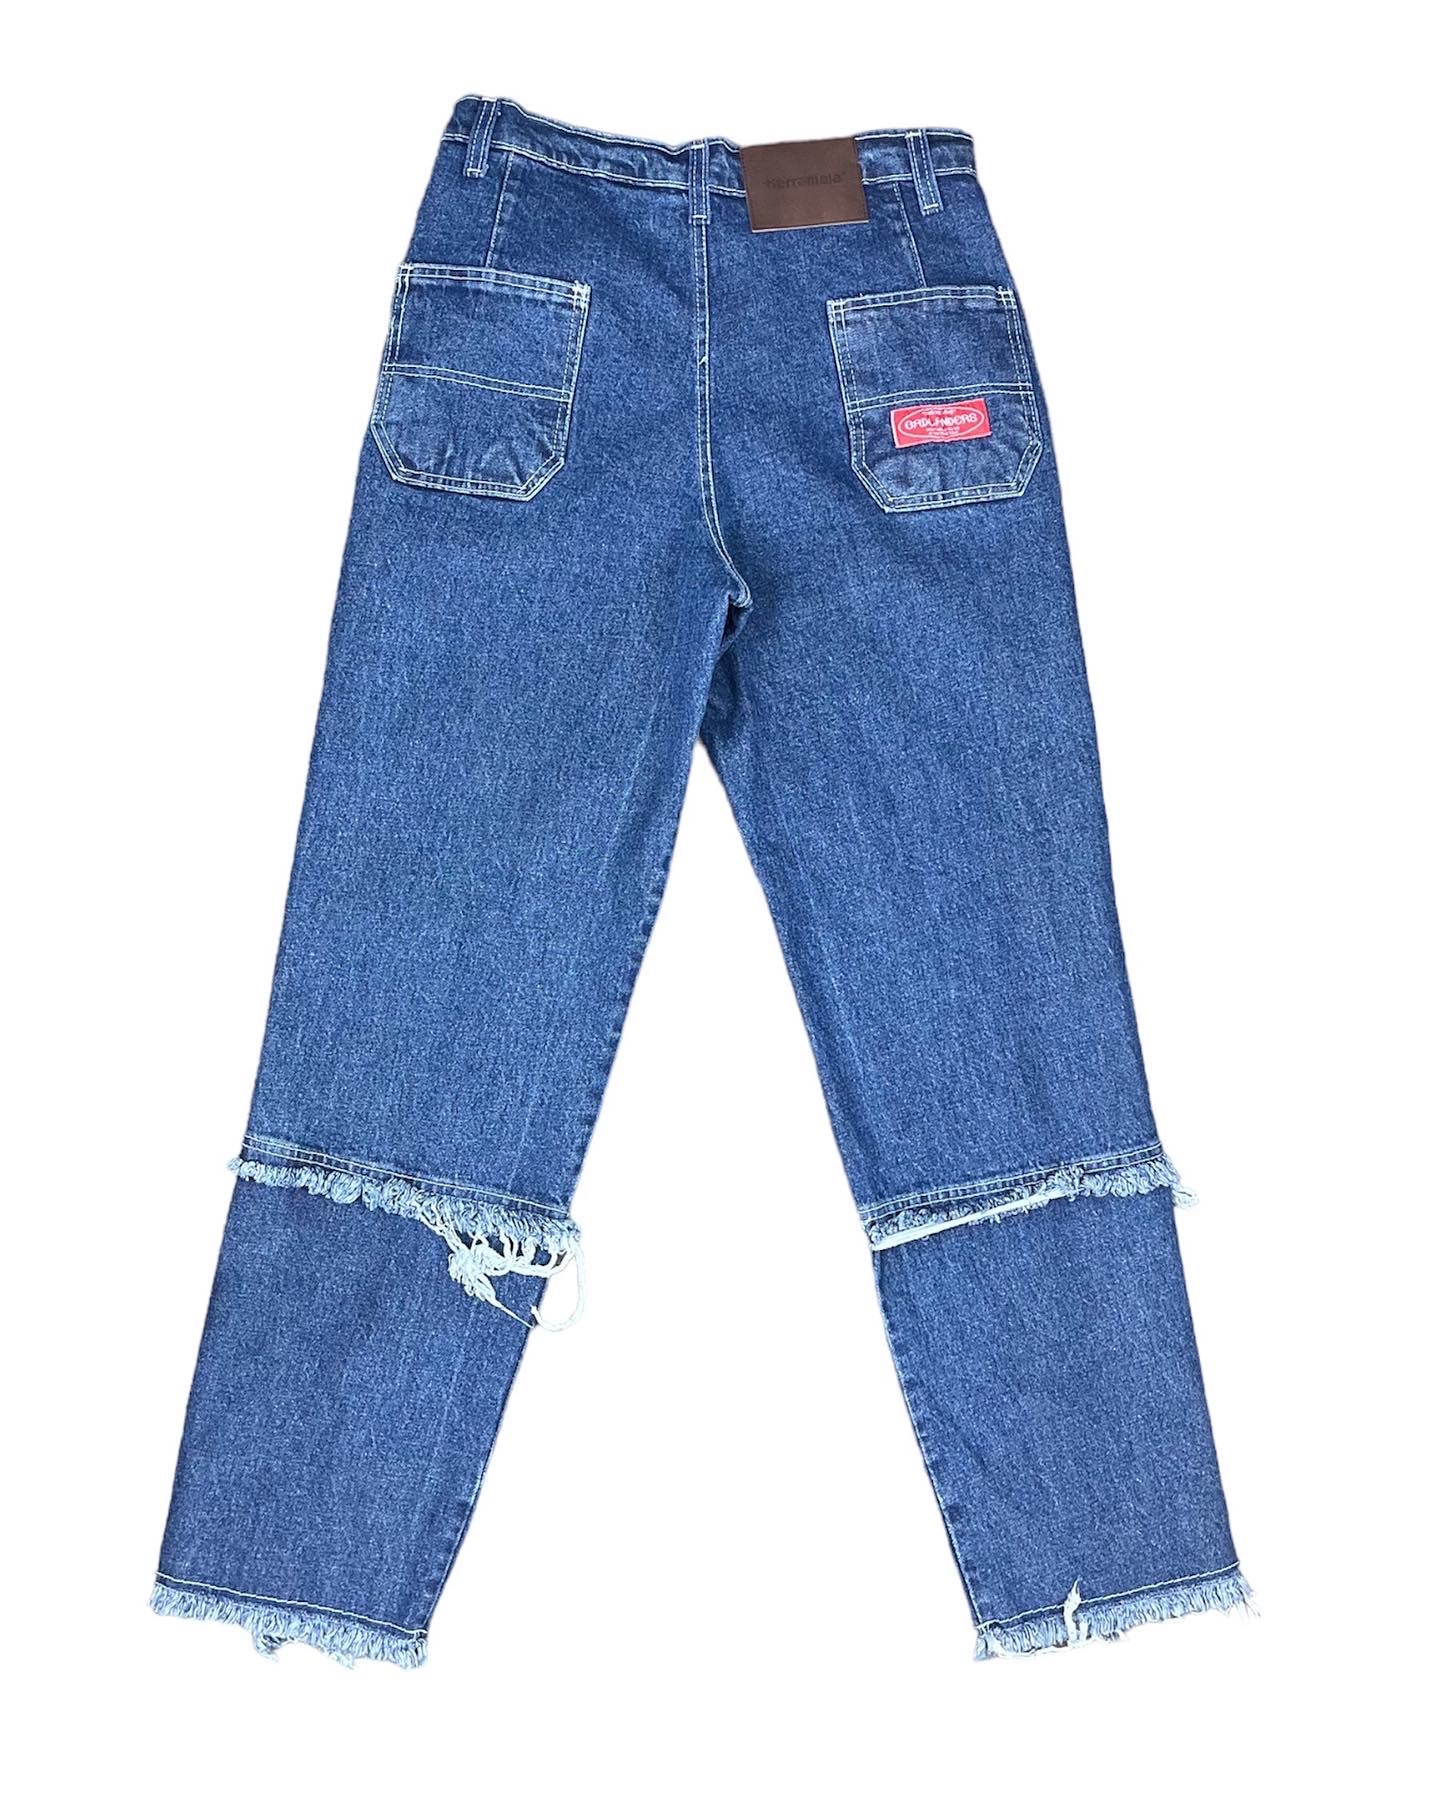 Raw edge jeans